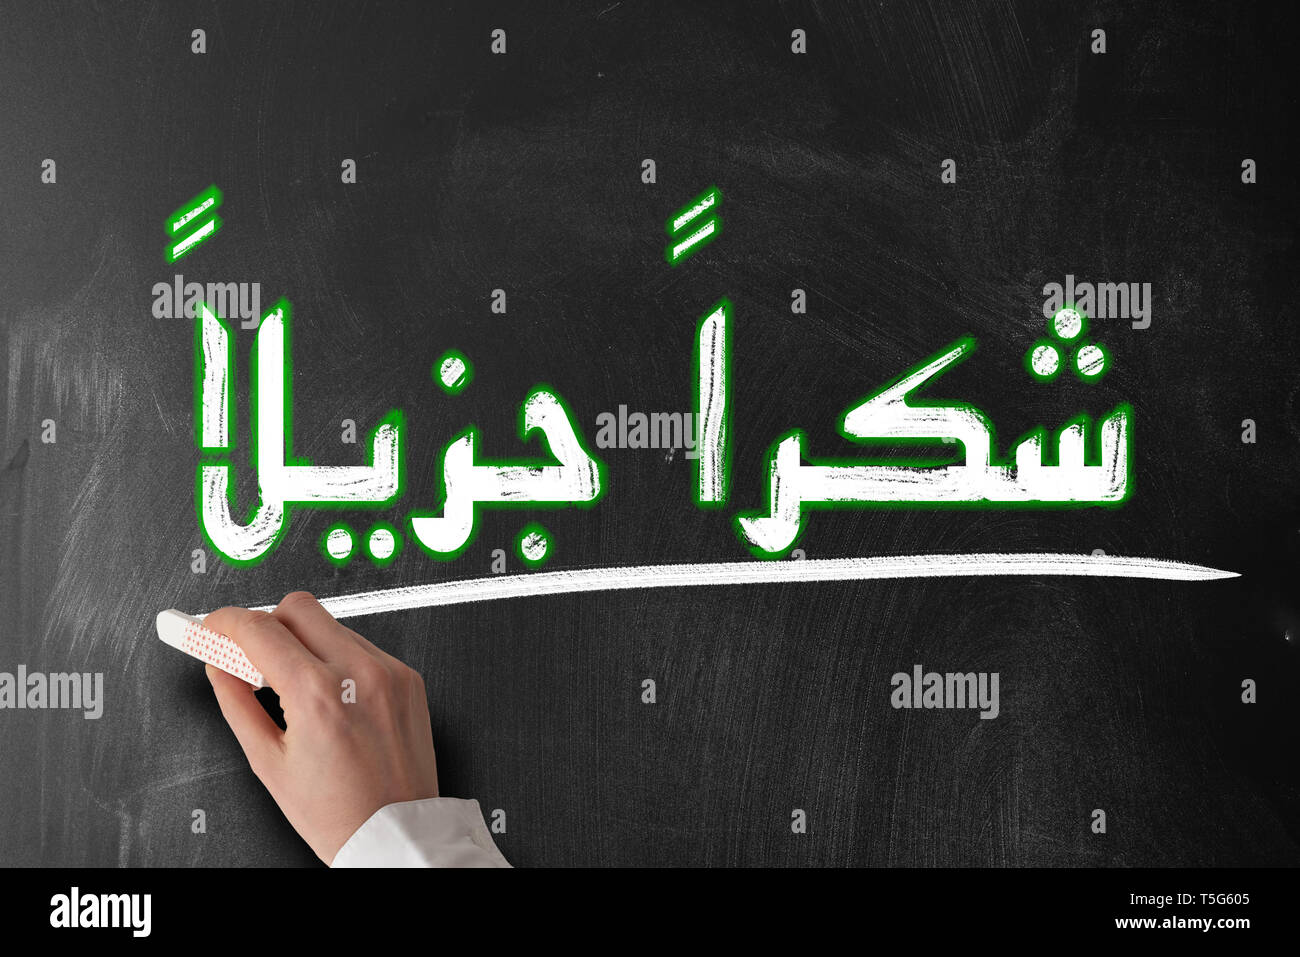 Shukraan jazilaan mots arabes en écriture arabe signifiant merci beaucoup on blackboard Banque D'Images